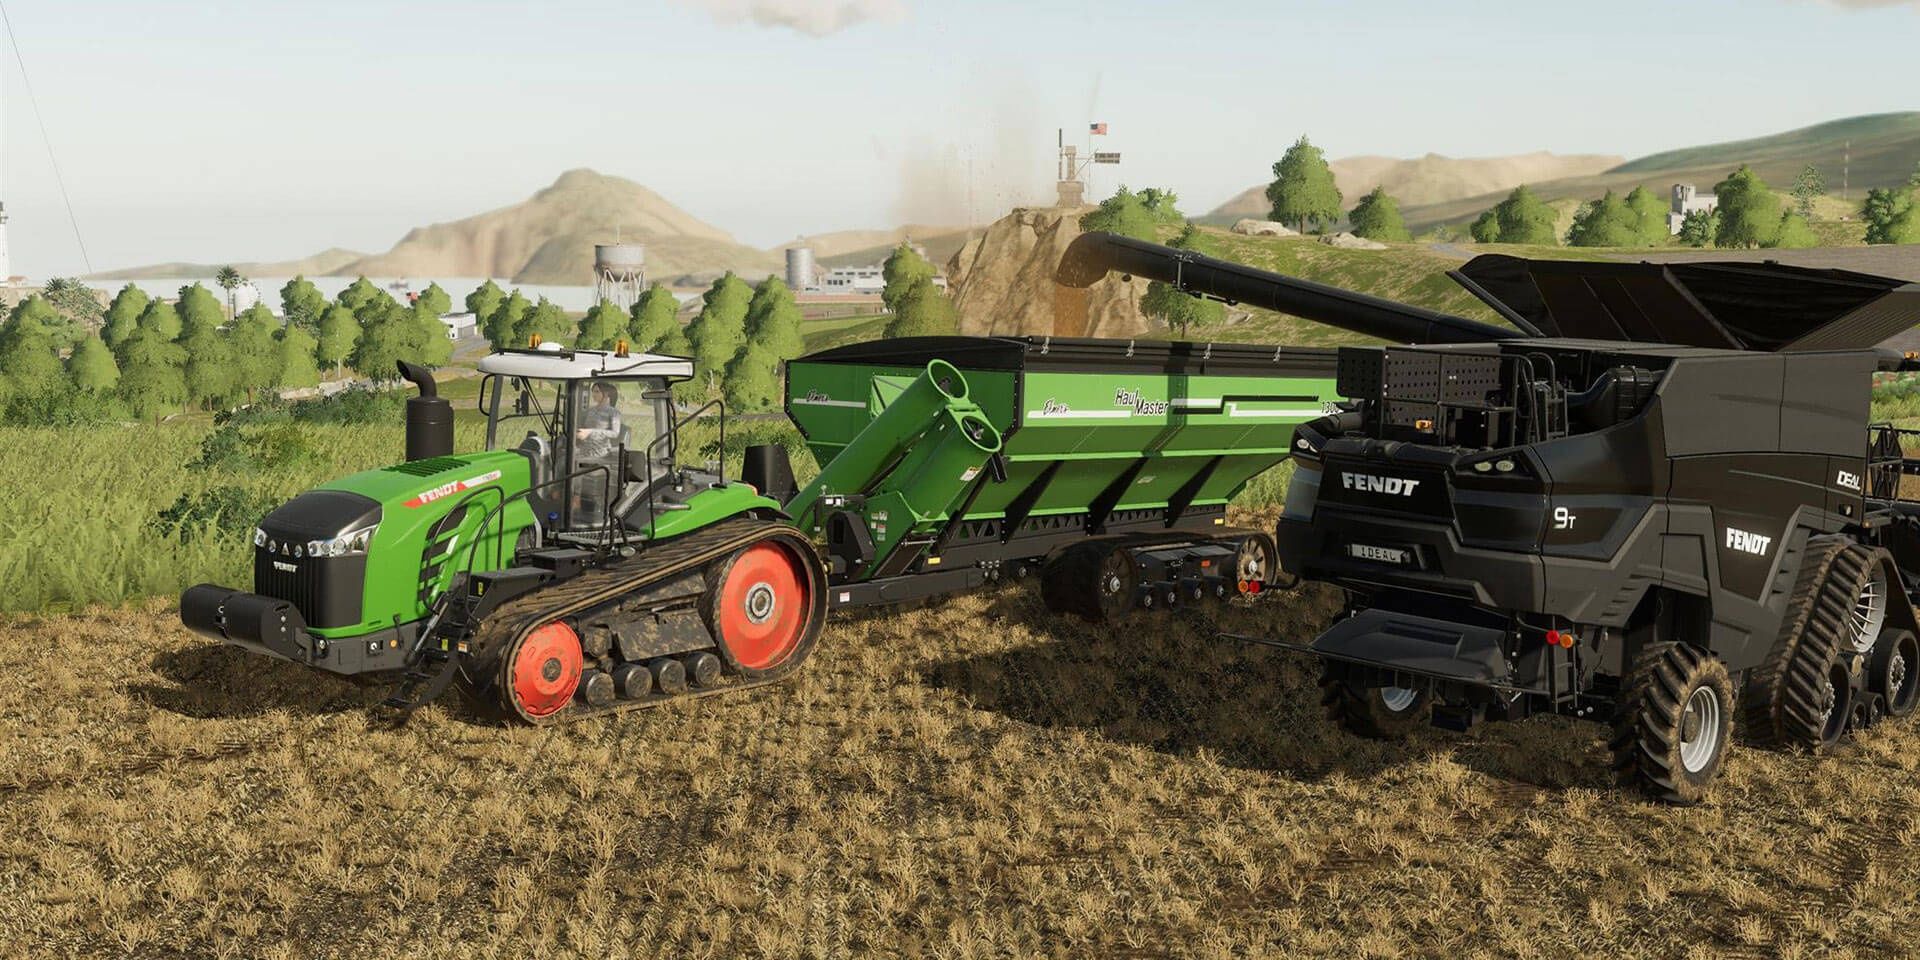 Farming Simulator 19 vehicles